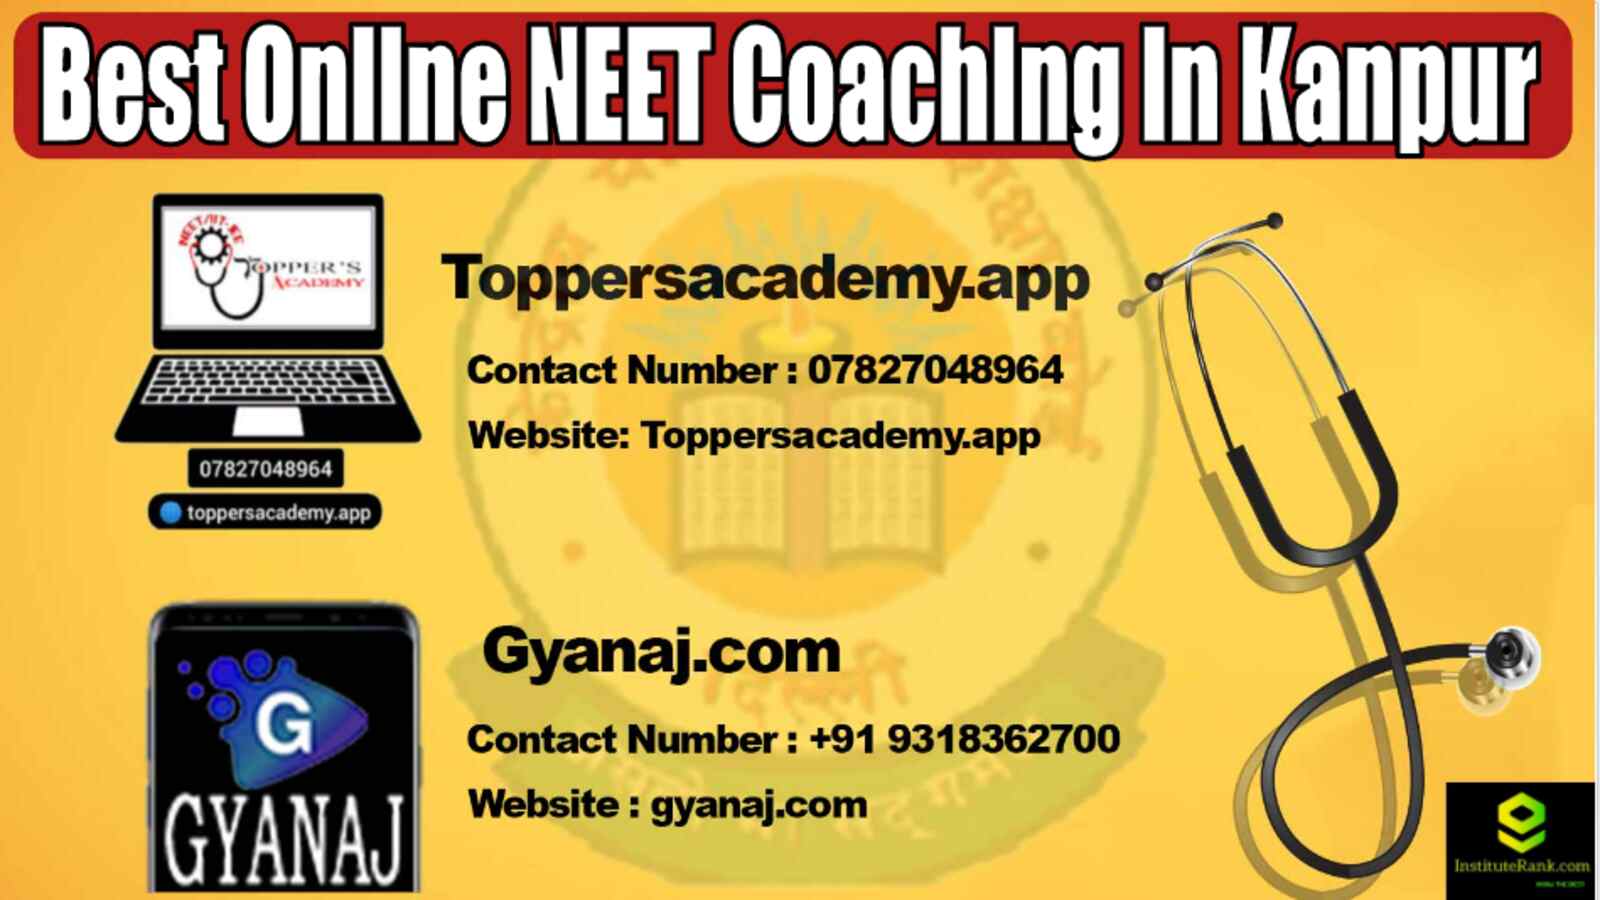 Best Online NEET Coaching in Kanpur 2022